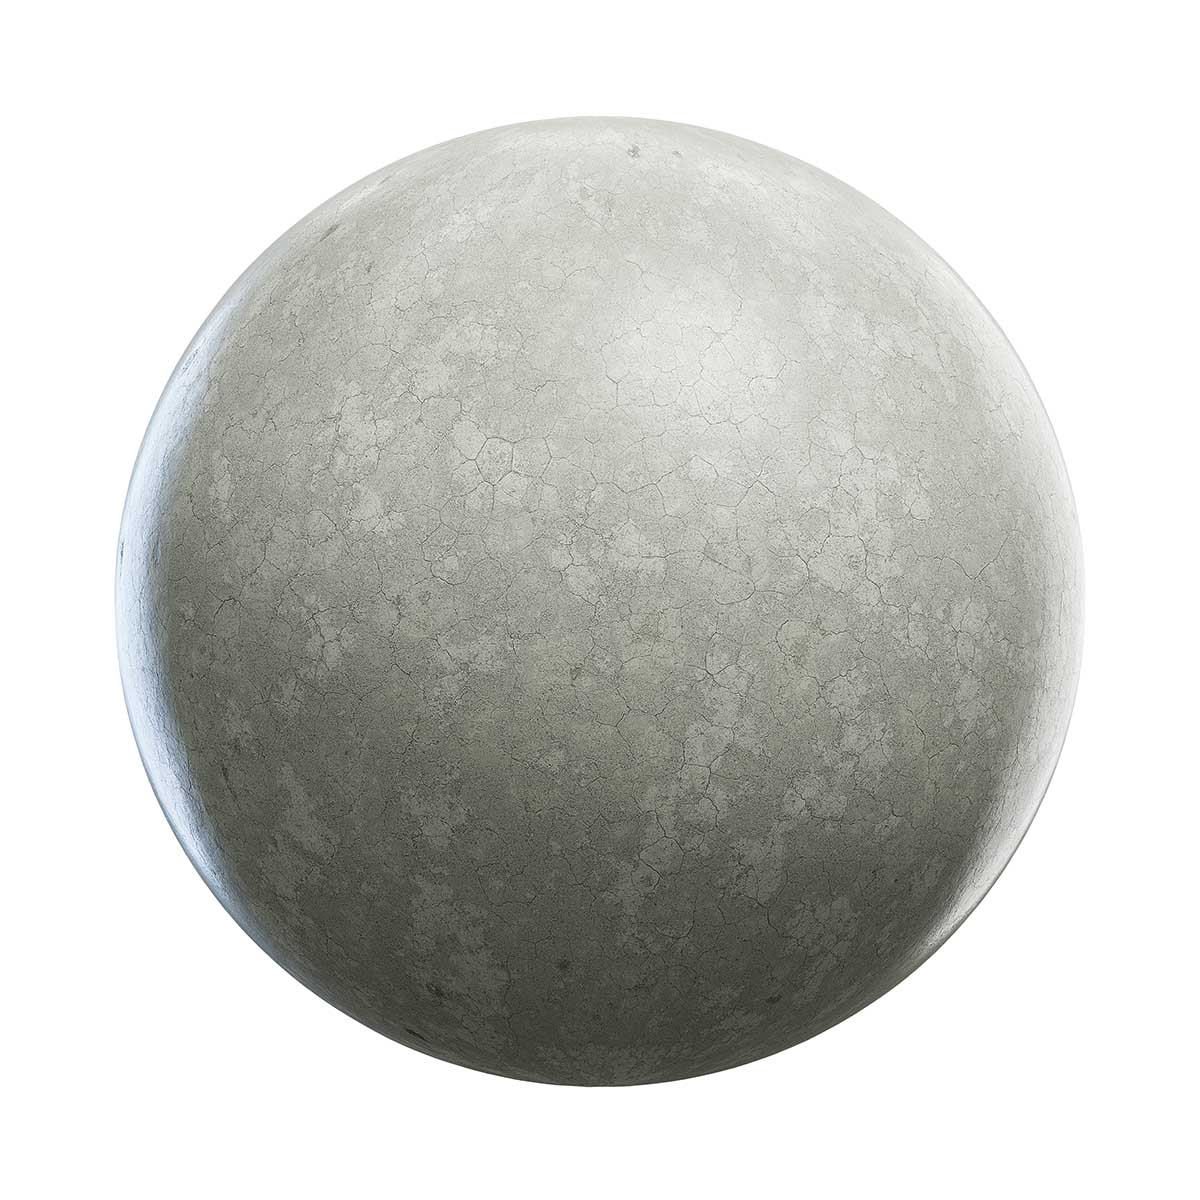 Grey Cracked Clay PBR Texture